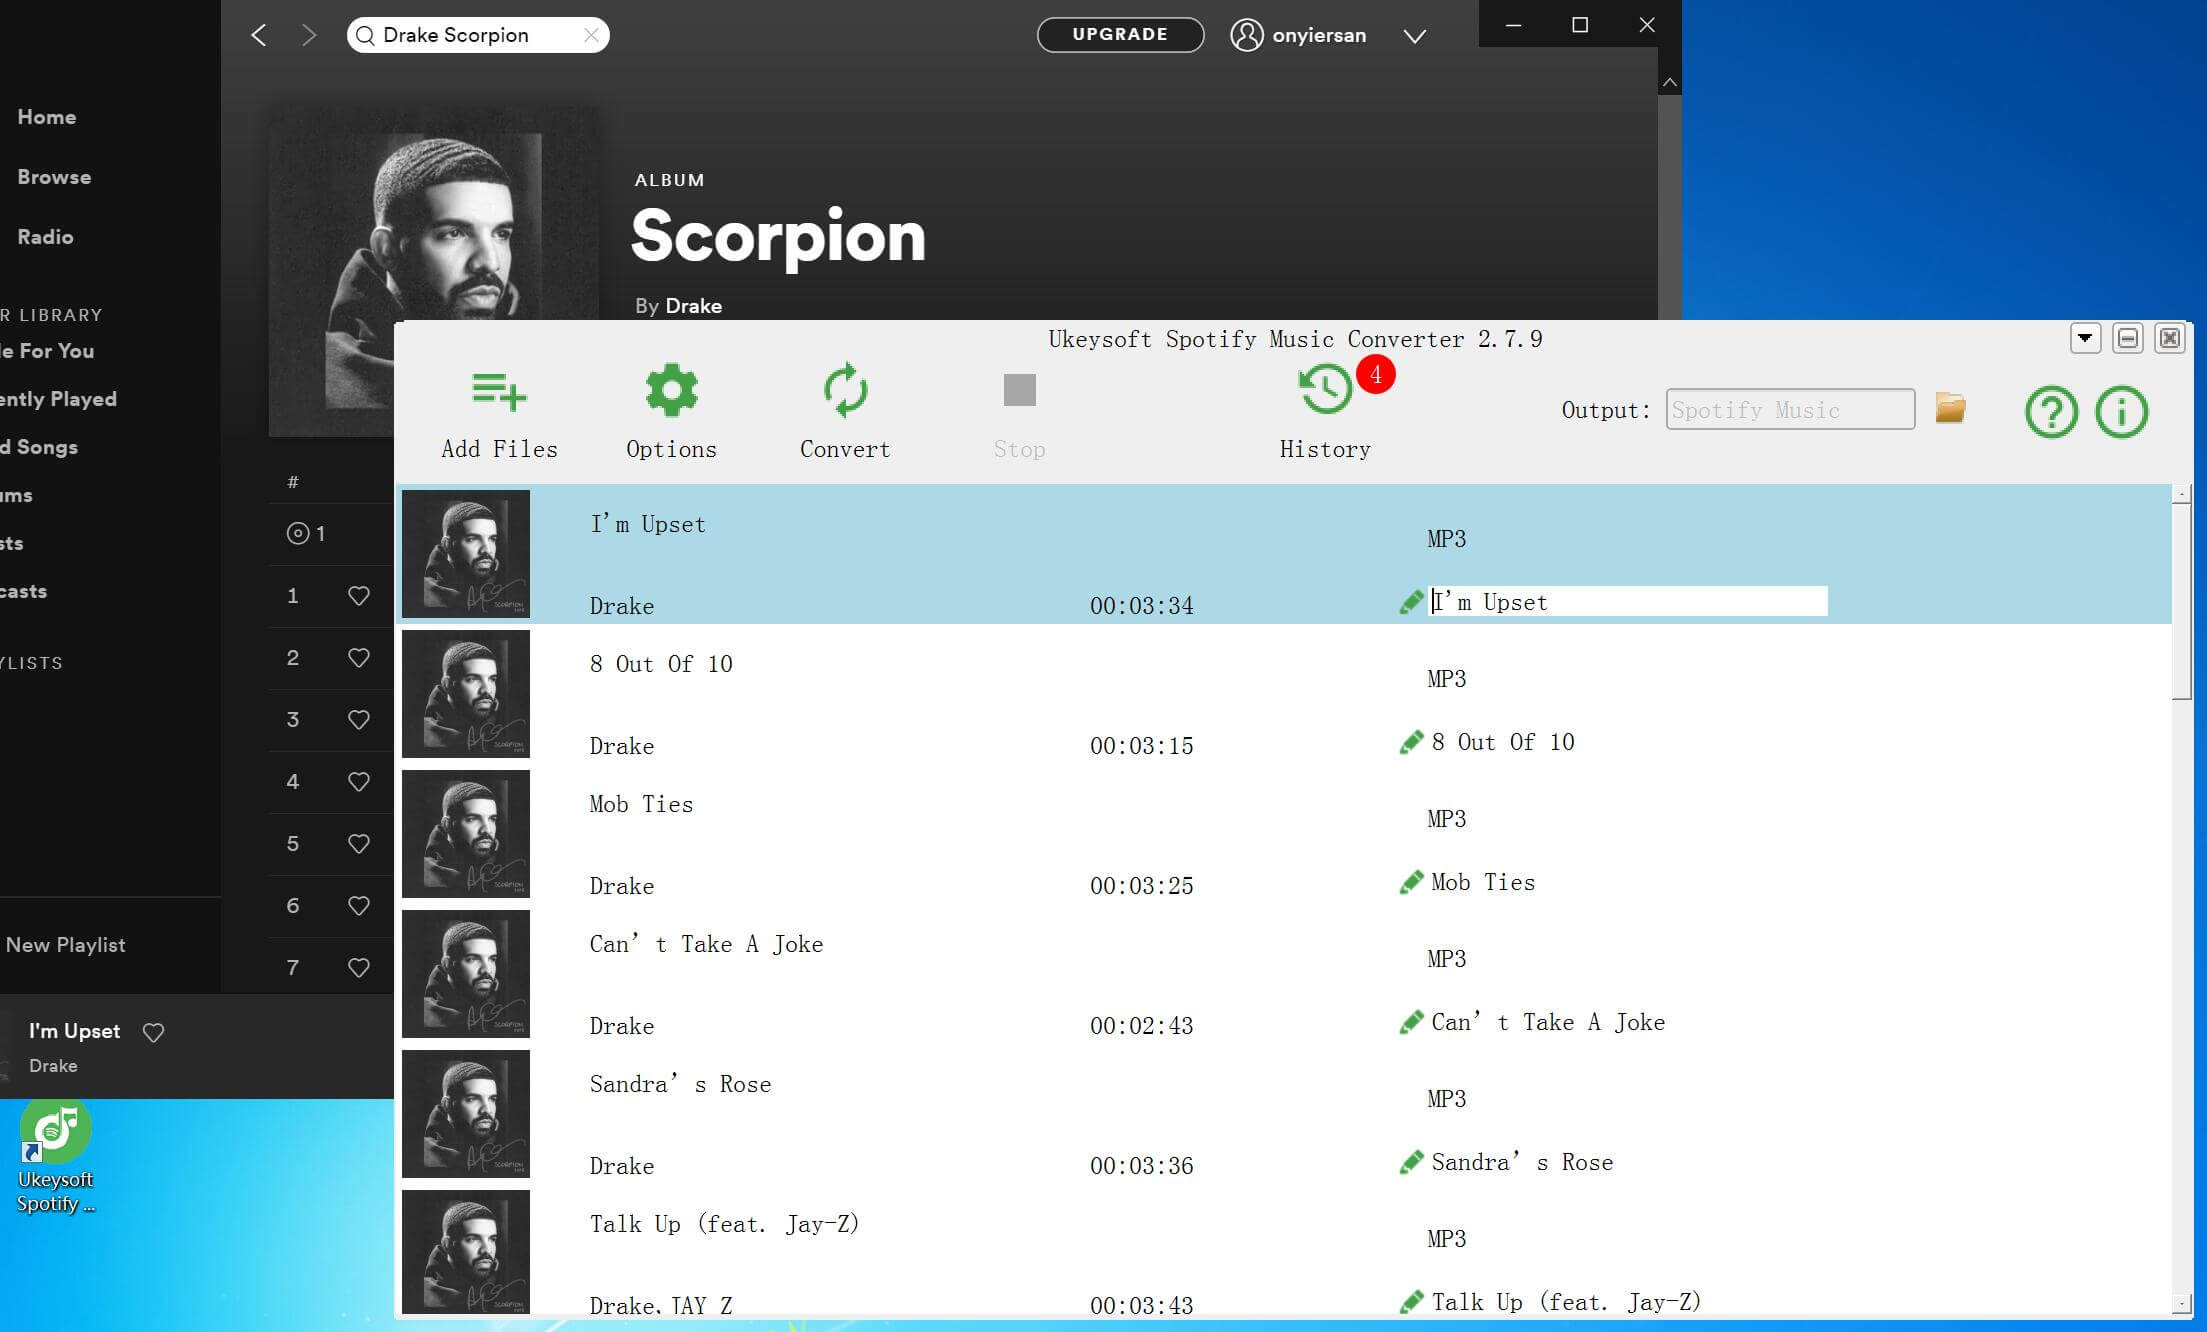 scarica gratis Drake's Scorpion Album da Spotify